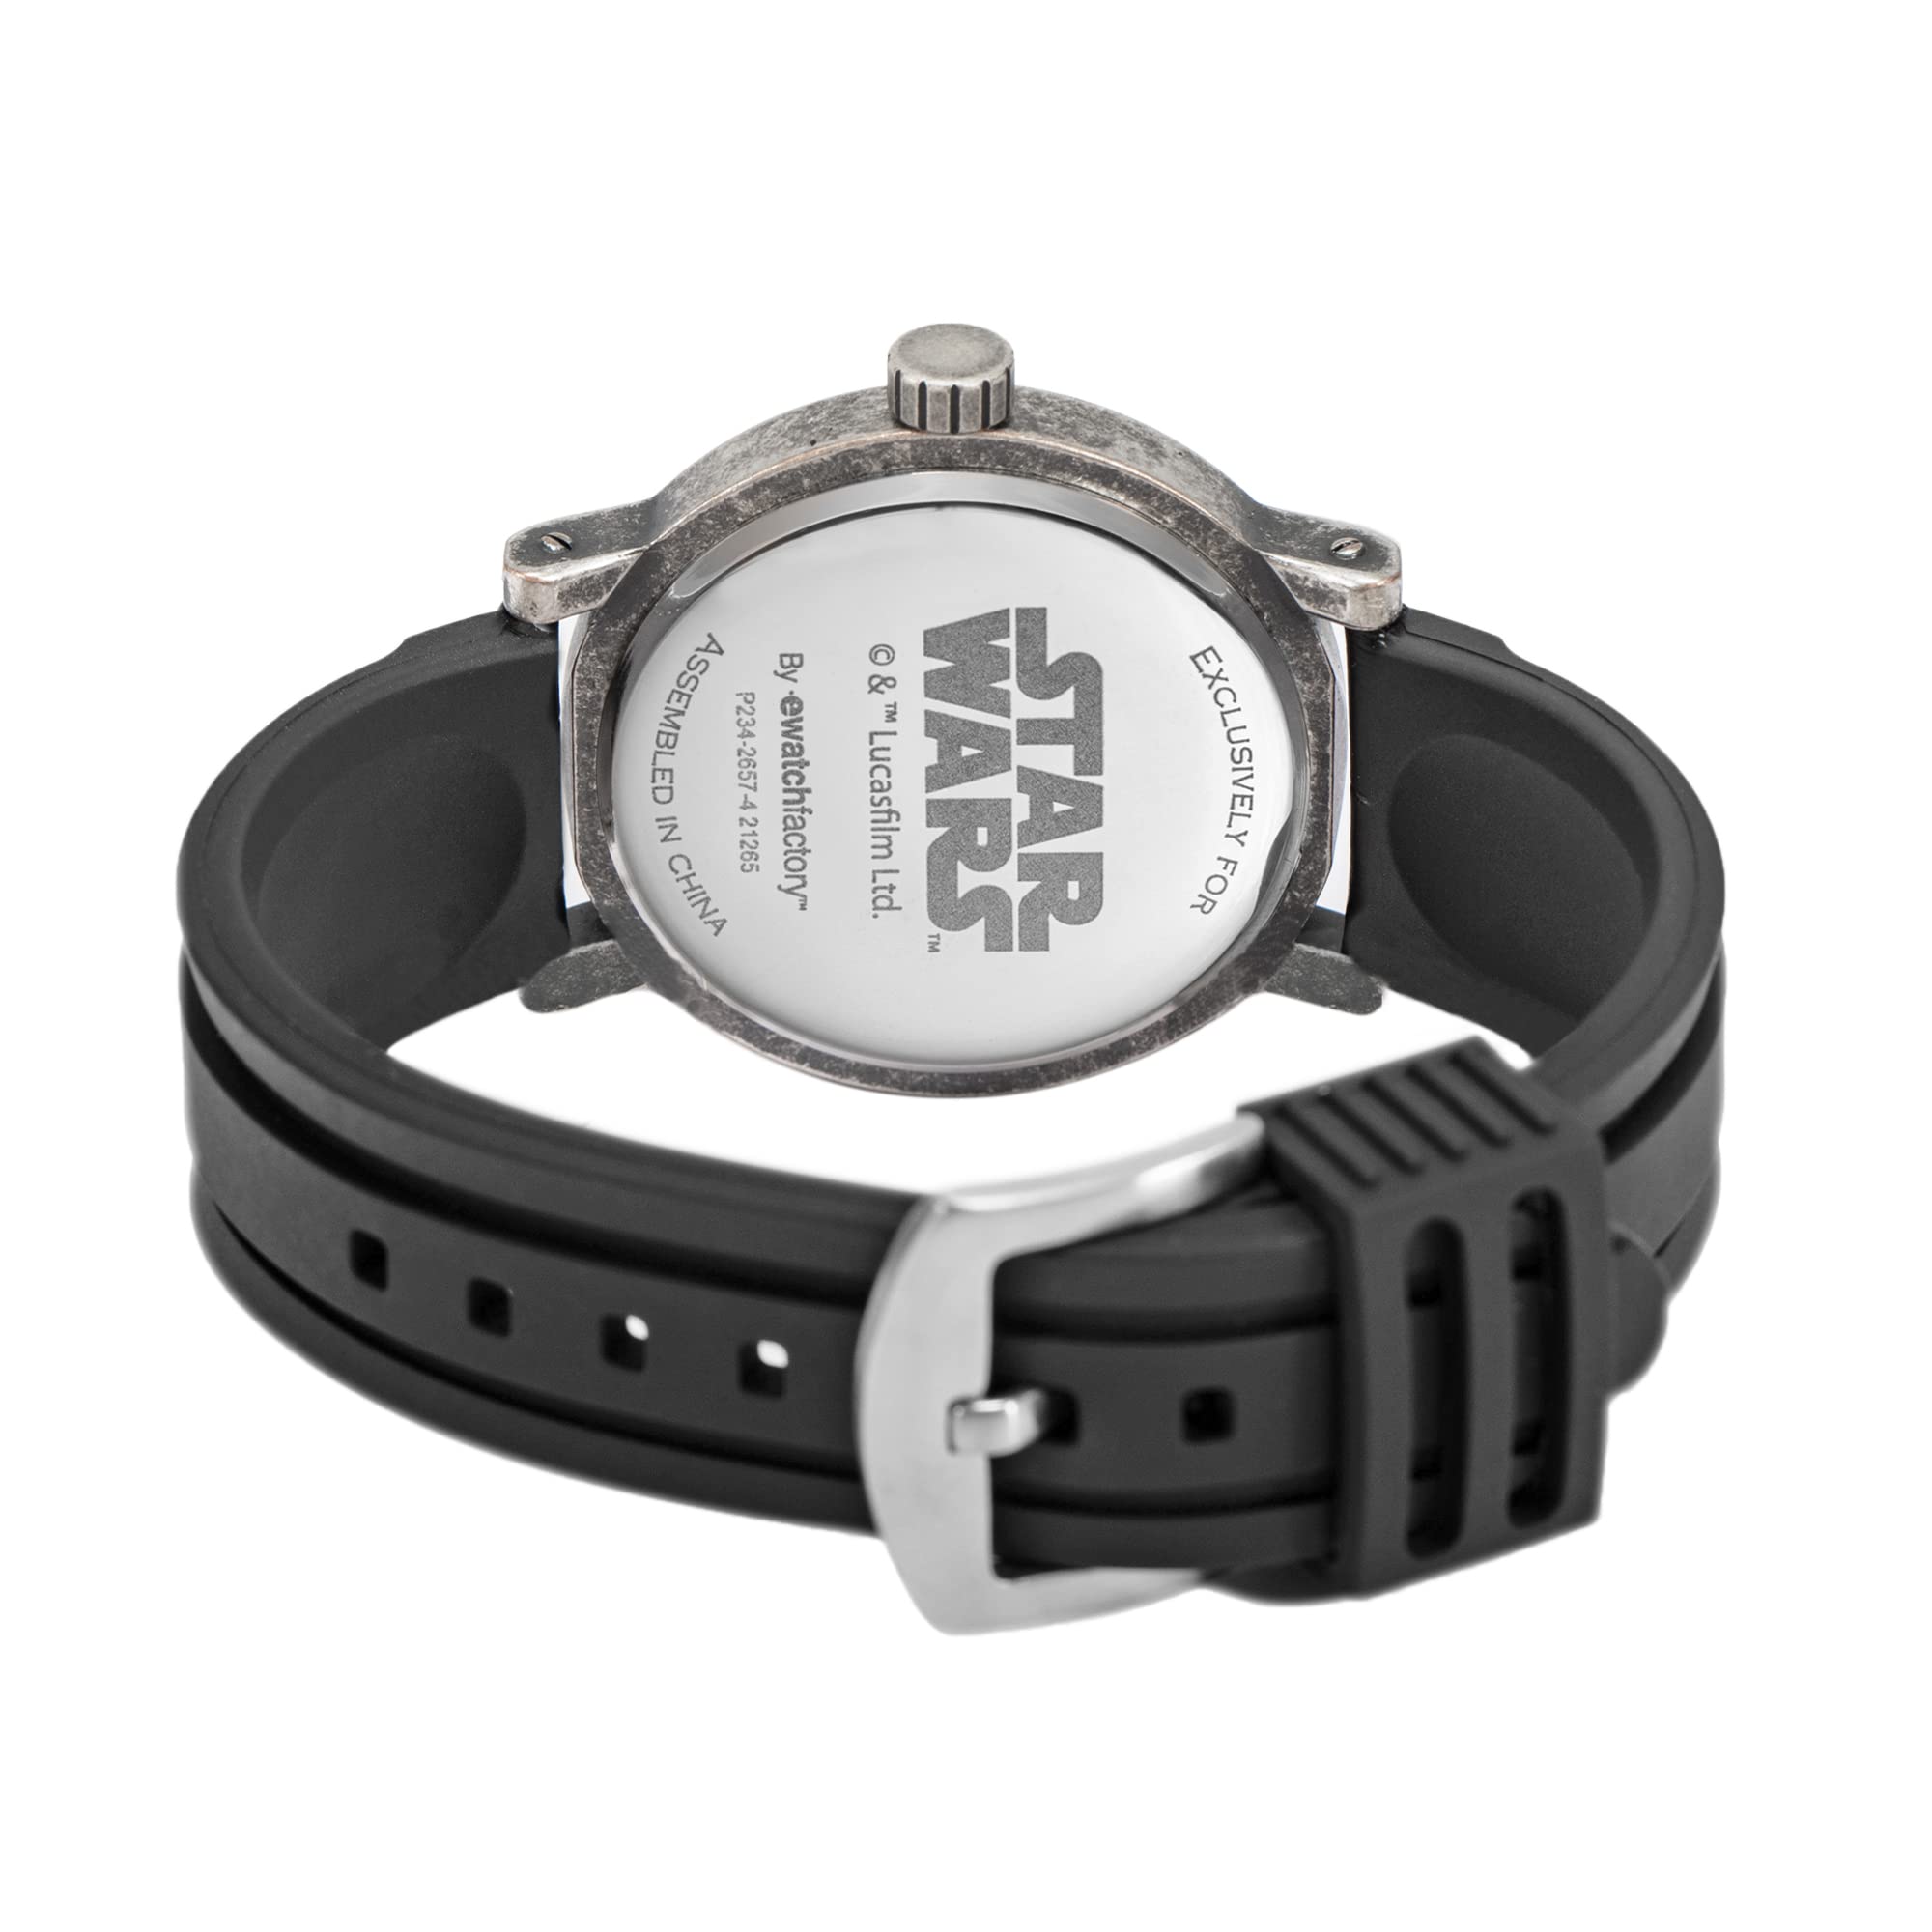 Star Wars Adult Vintage Analog Quartz Watch, Grey/Black/Black